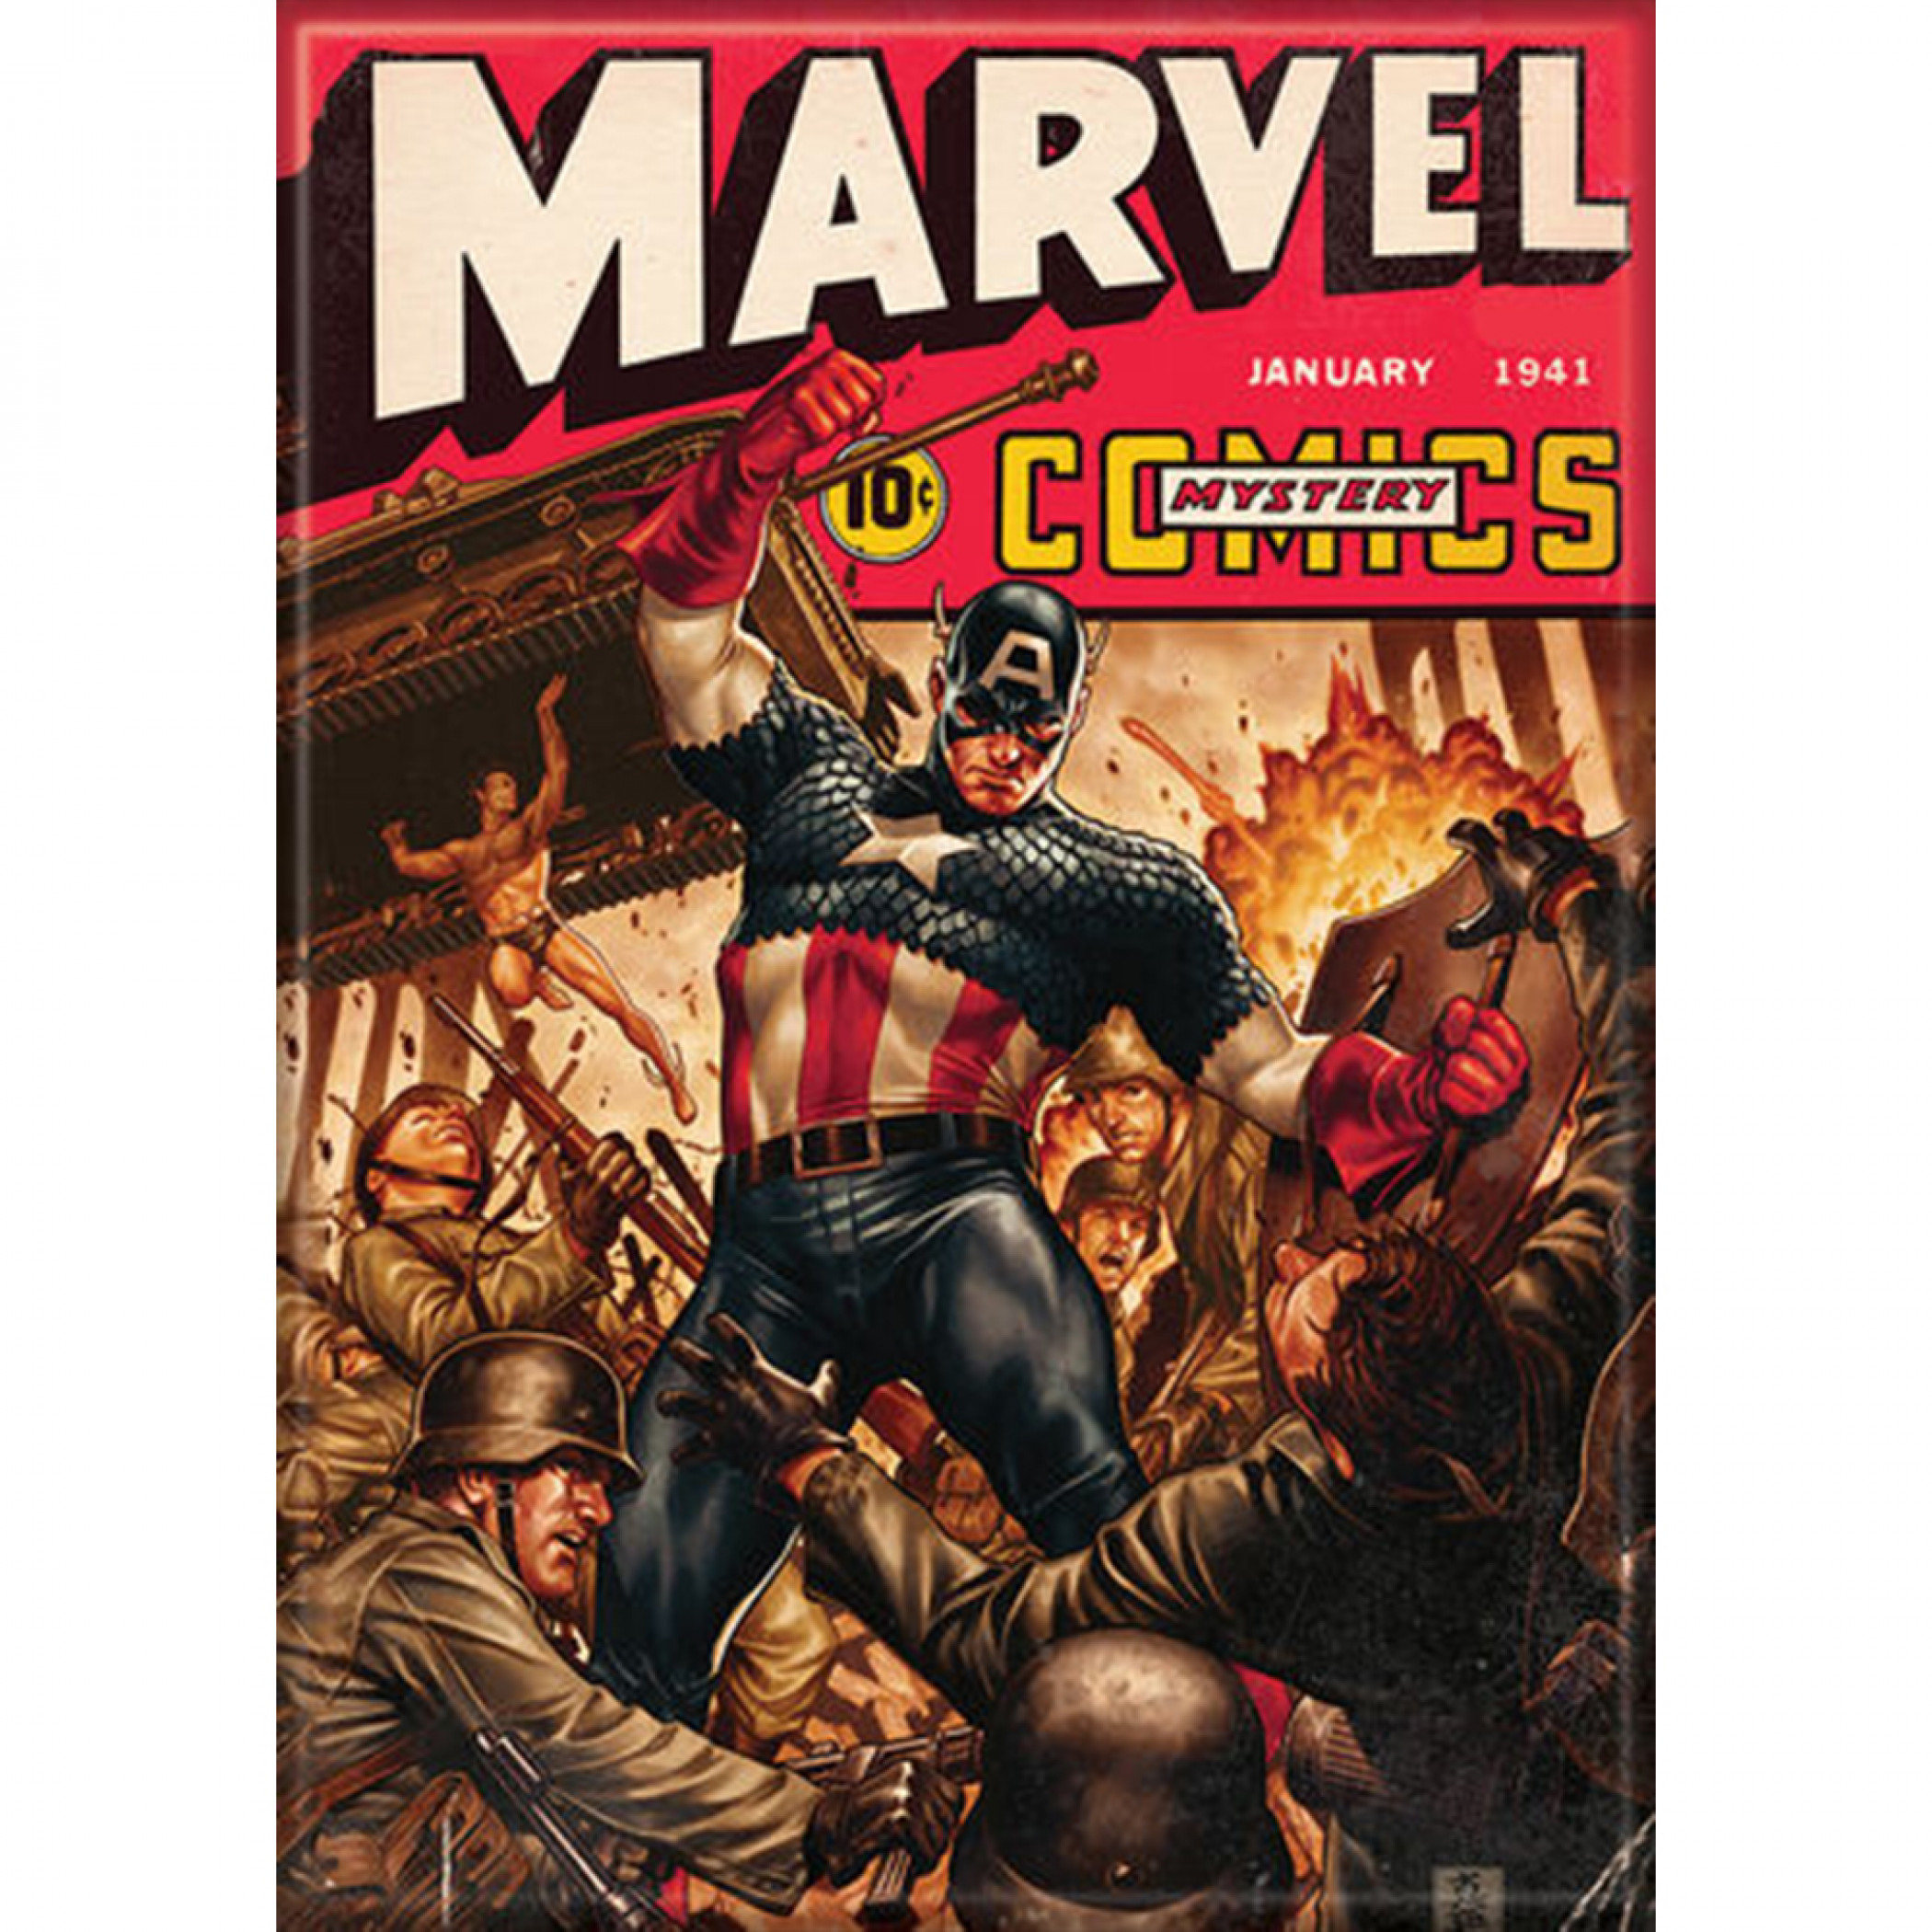 Marvel Mystery Comics Captain America & Namor WWII Comic Cover Magnet